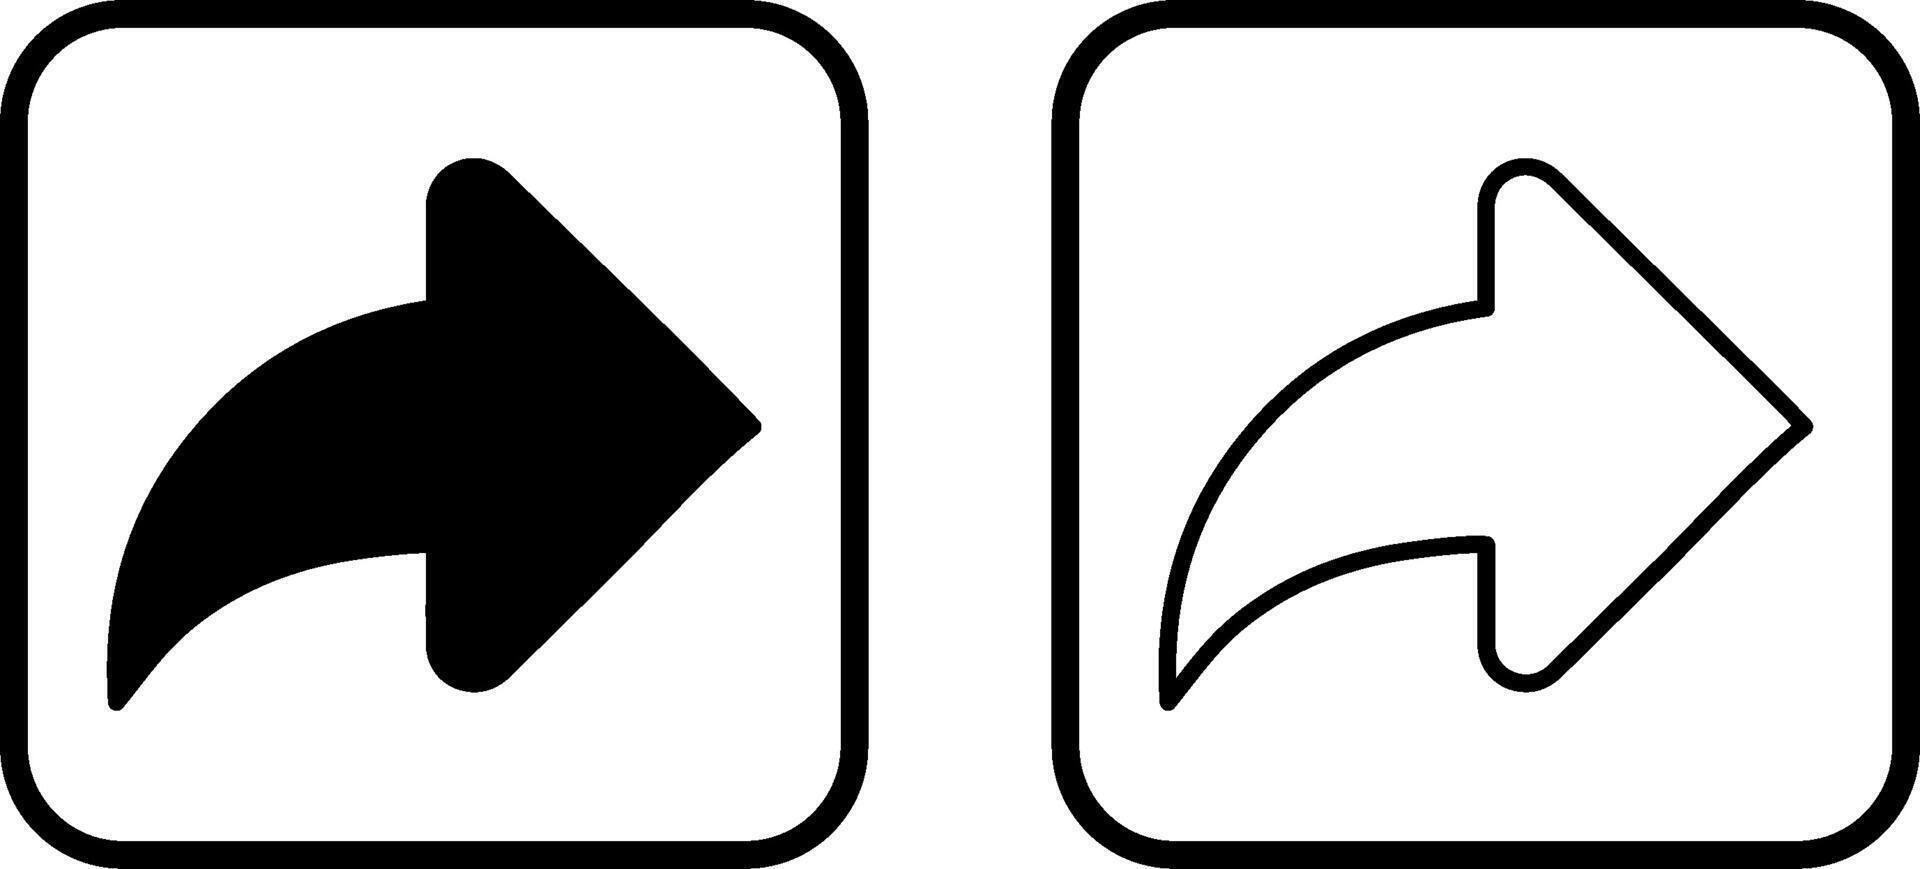 Right Back Arrow Vector Icon